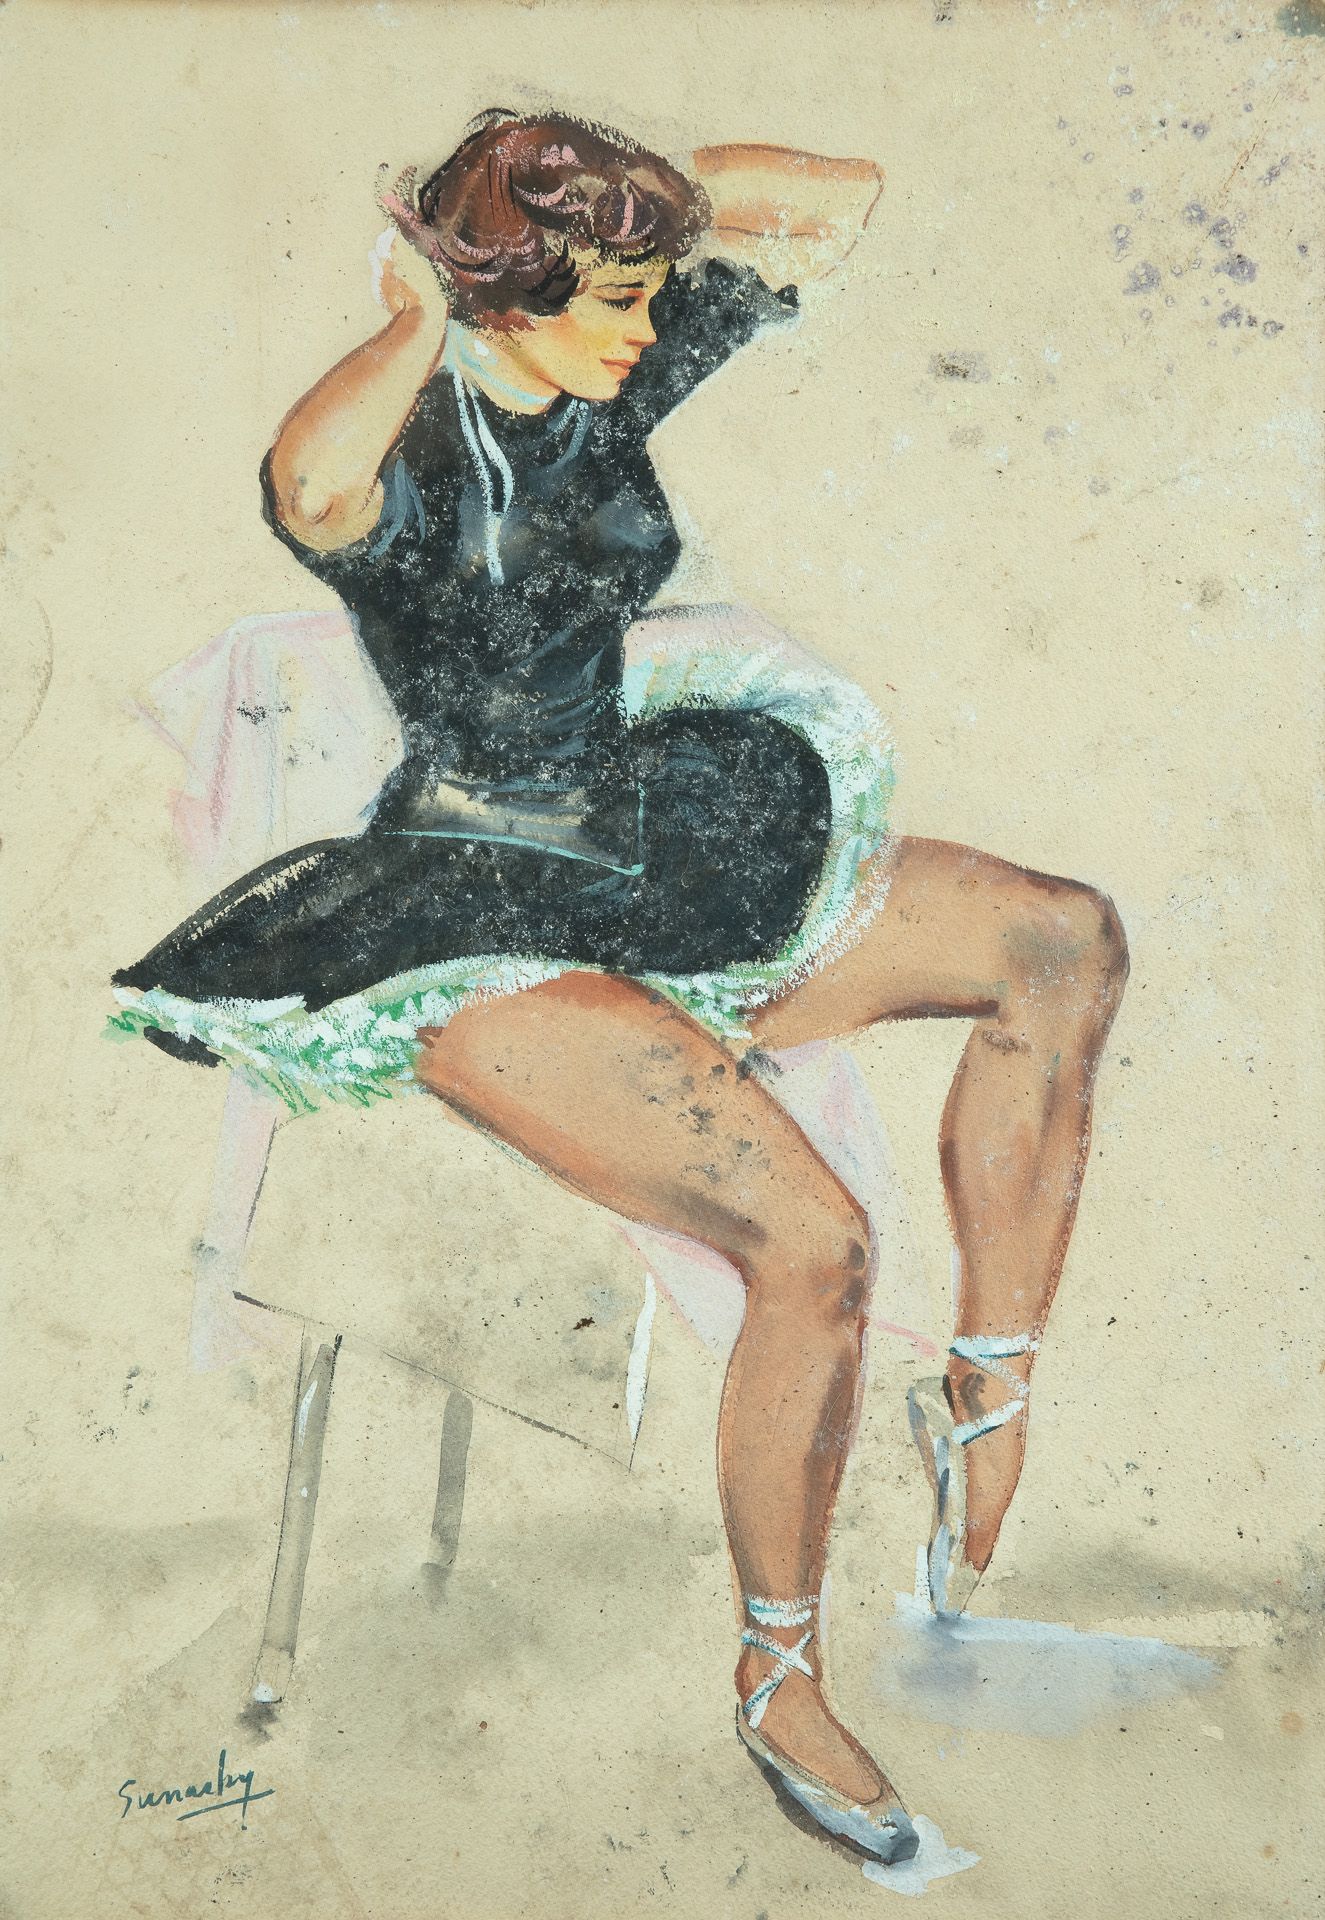 Null GUNARKY ( xx ème) 

Ballerine 

Aquarelle, 61 x 42 cm, SBG. Altérations